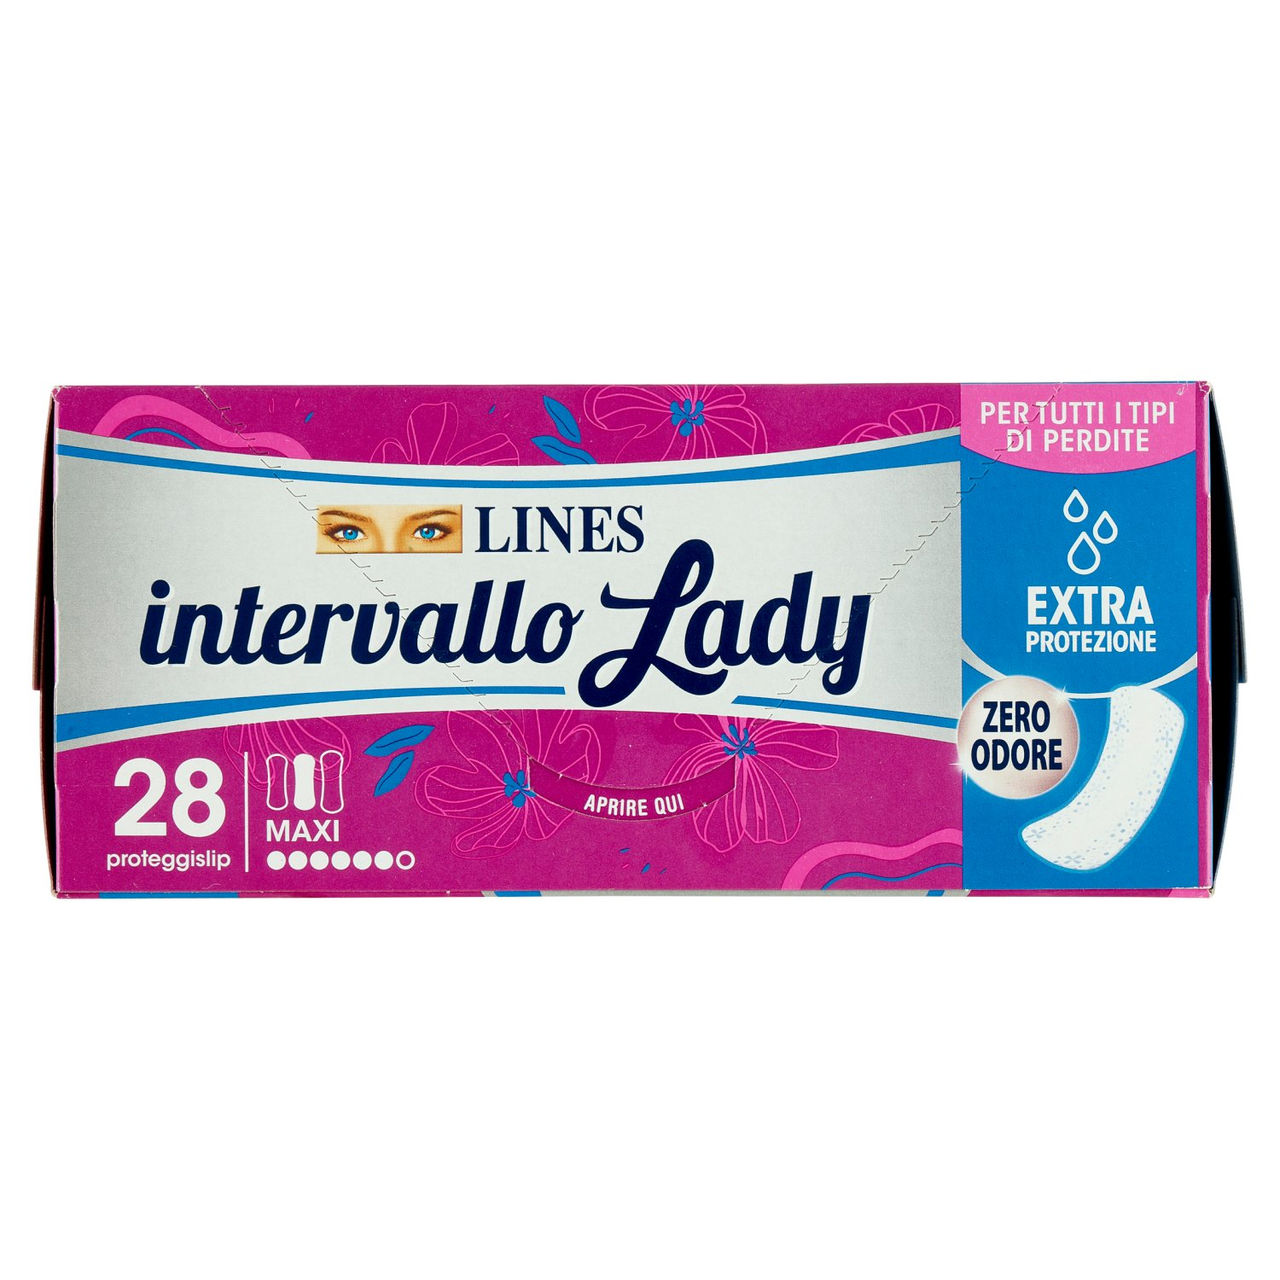 Lines Intervallo Lady Plus Maxi 28 pz online